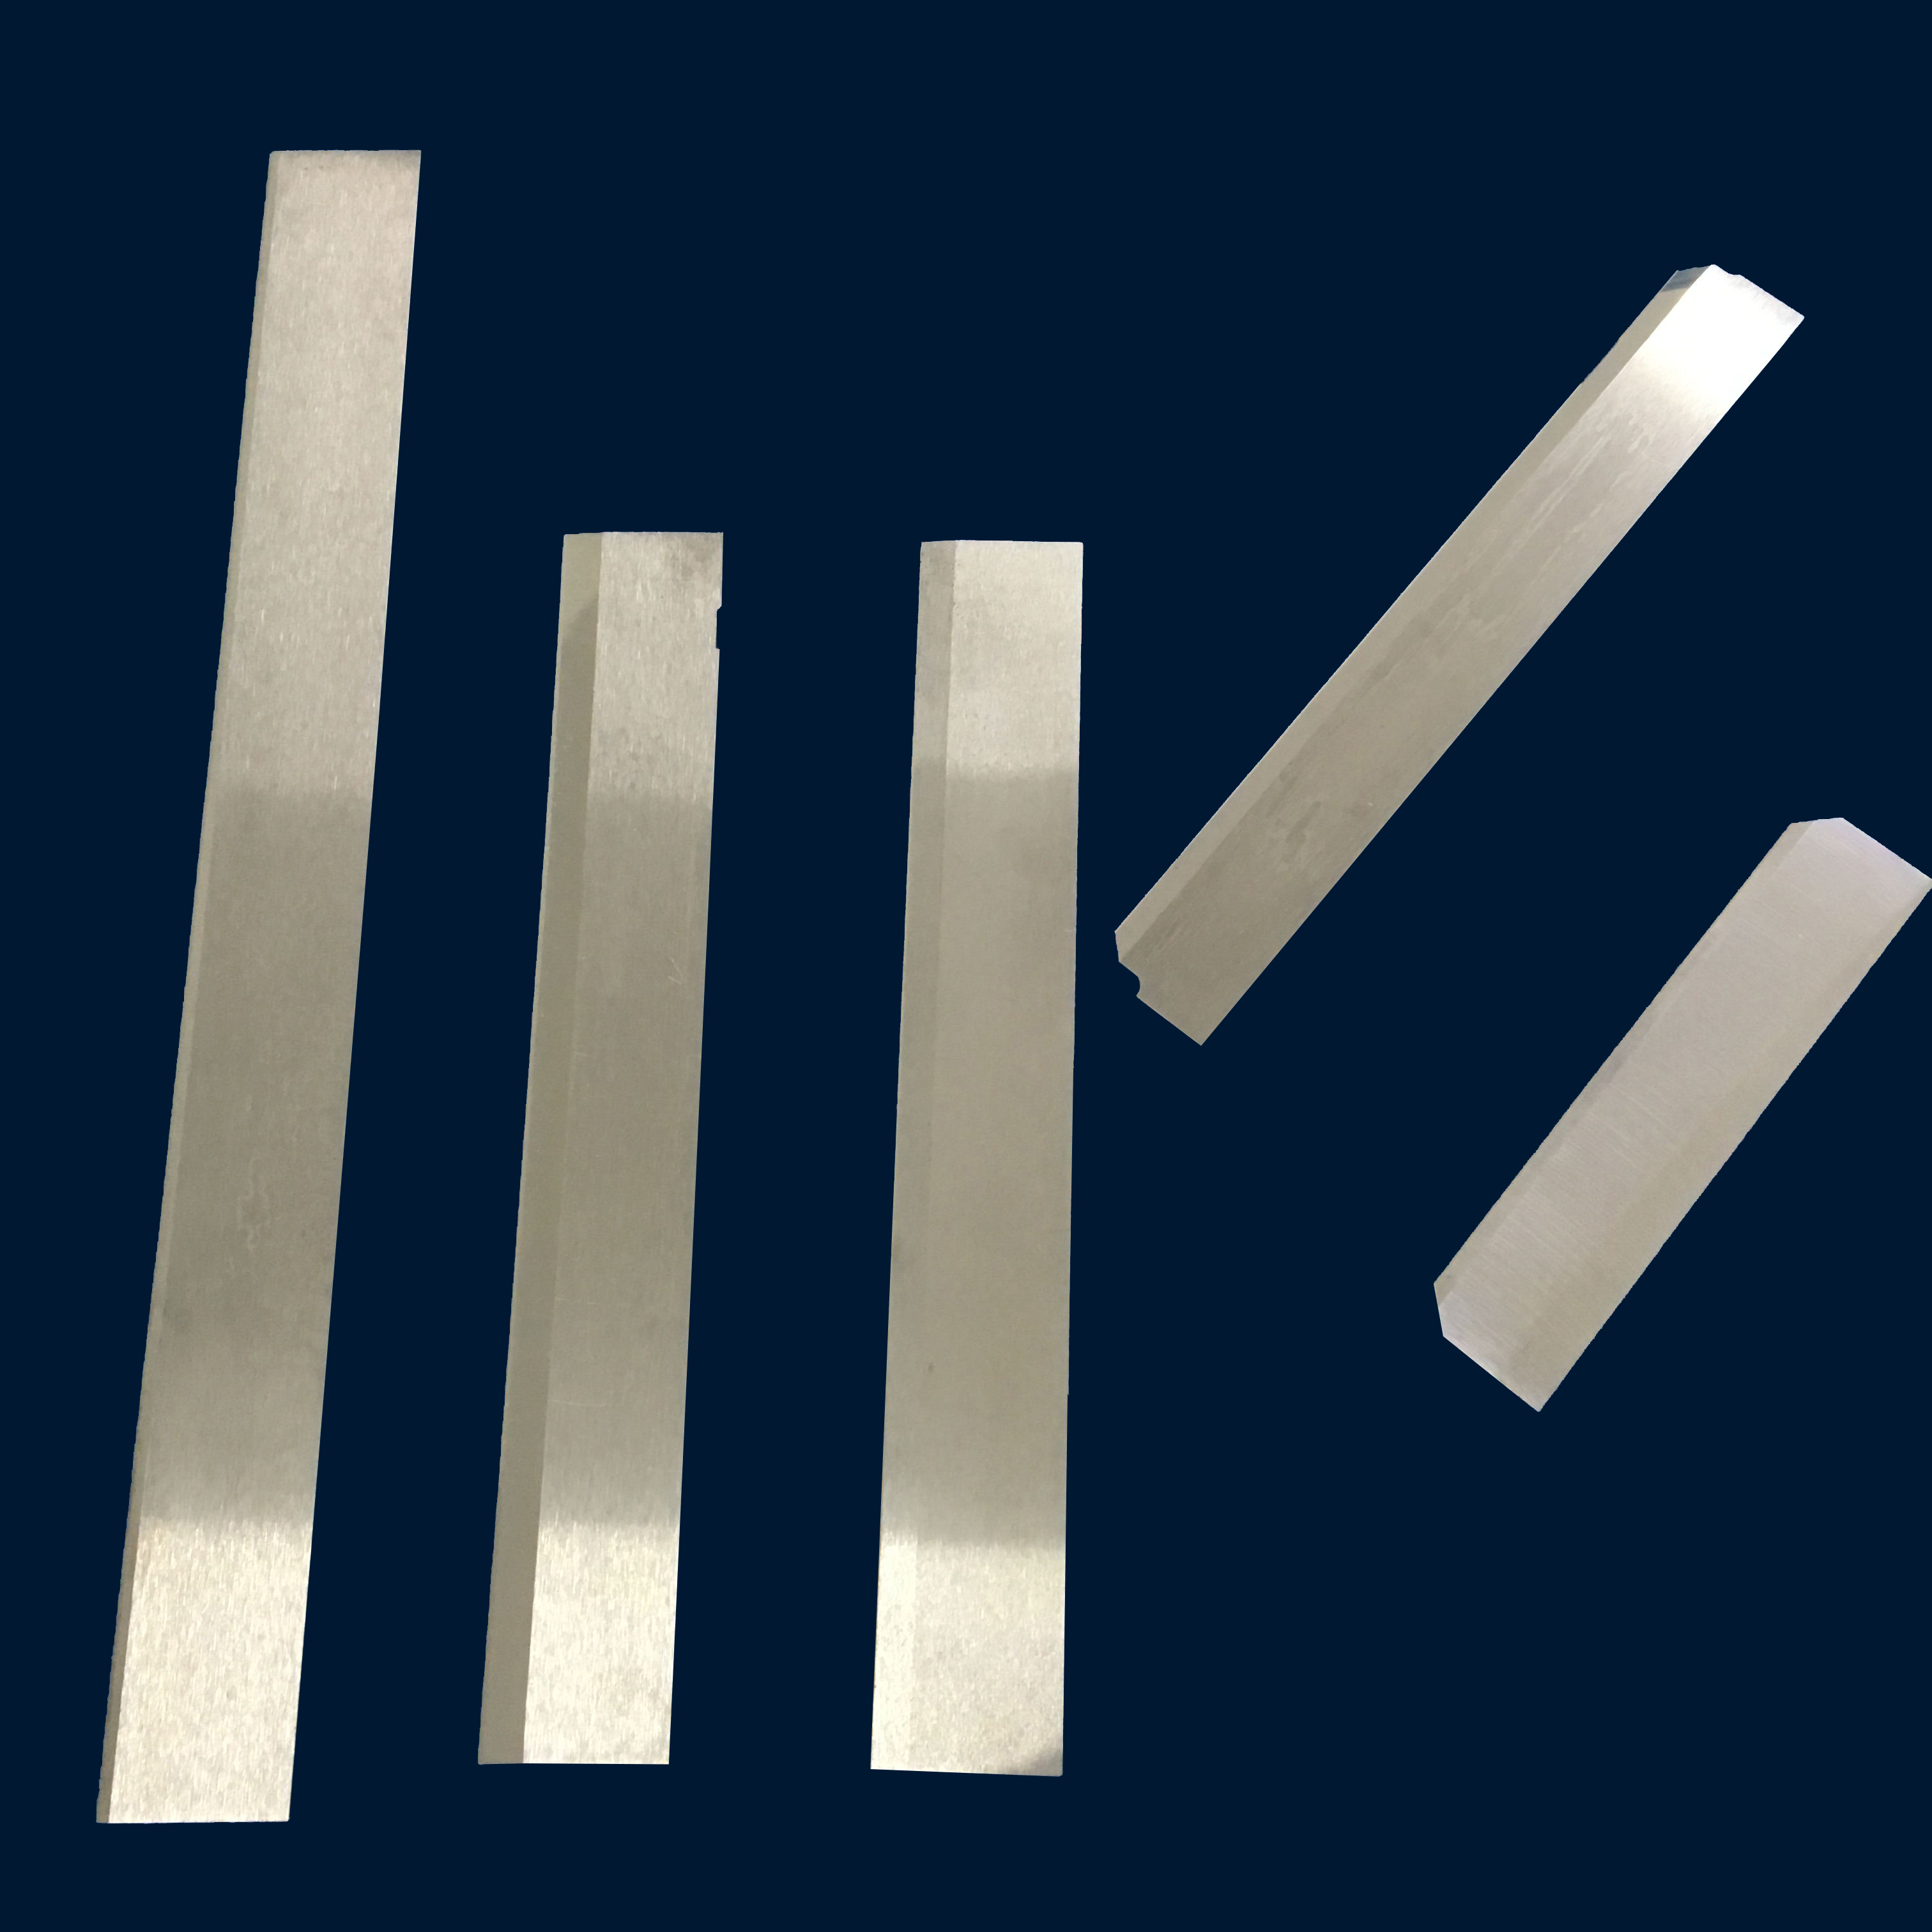 Tungsten Carbide chemical fiber cutter blades /Staple fiber cutter blades